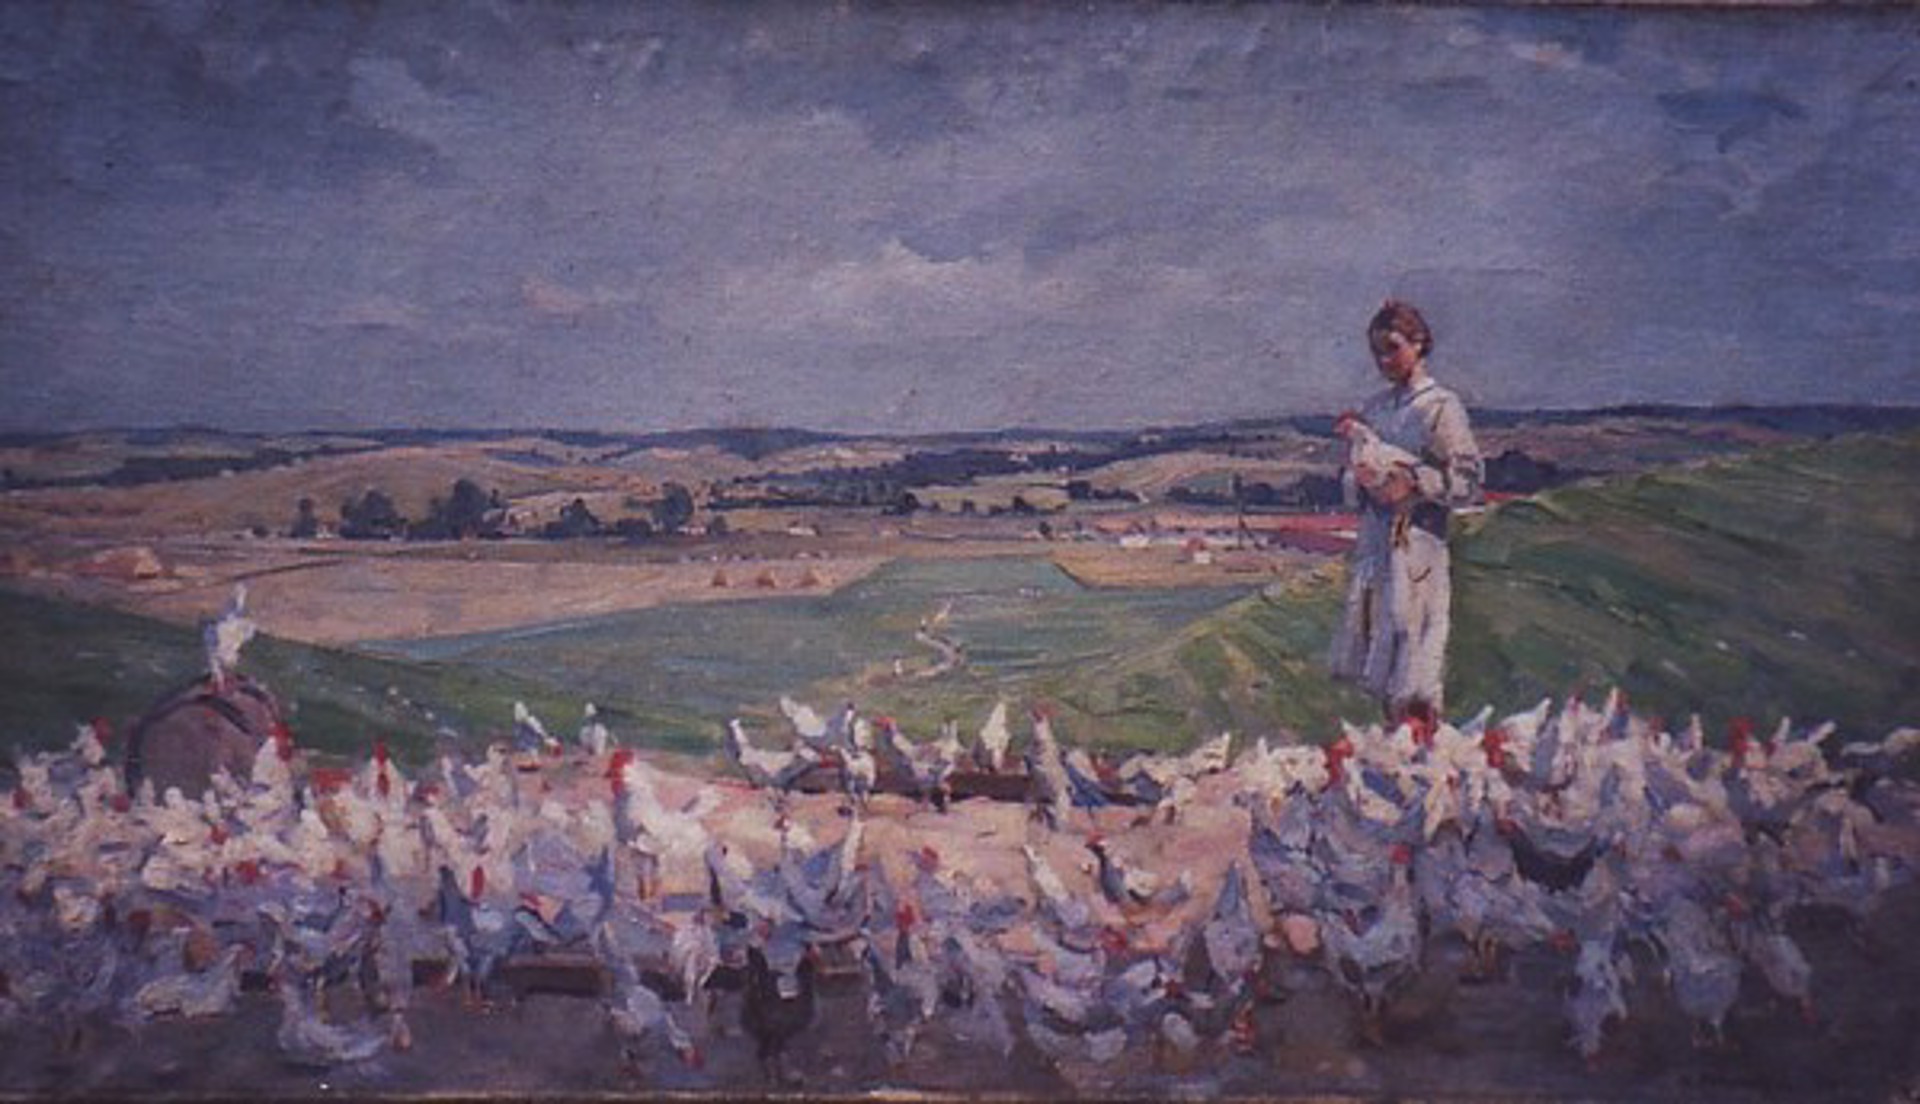 Tending the Flock by Nadeszda Kompaniyets